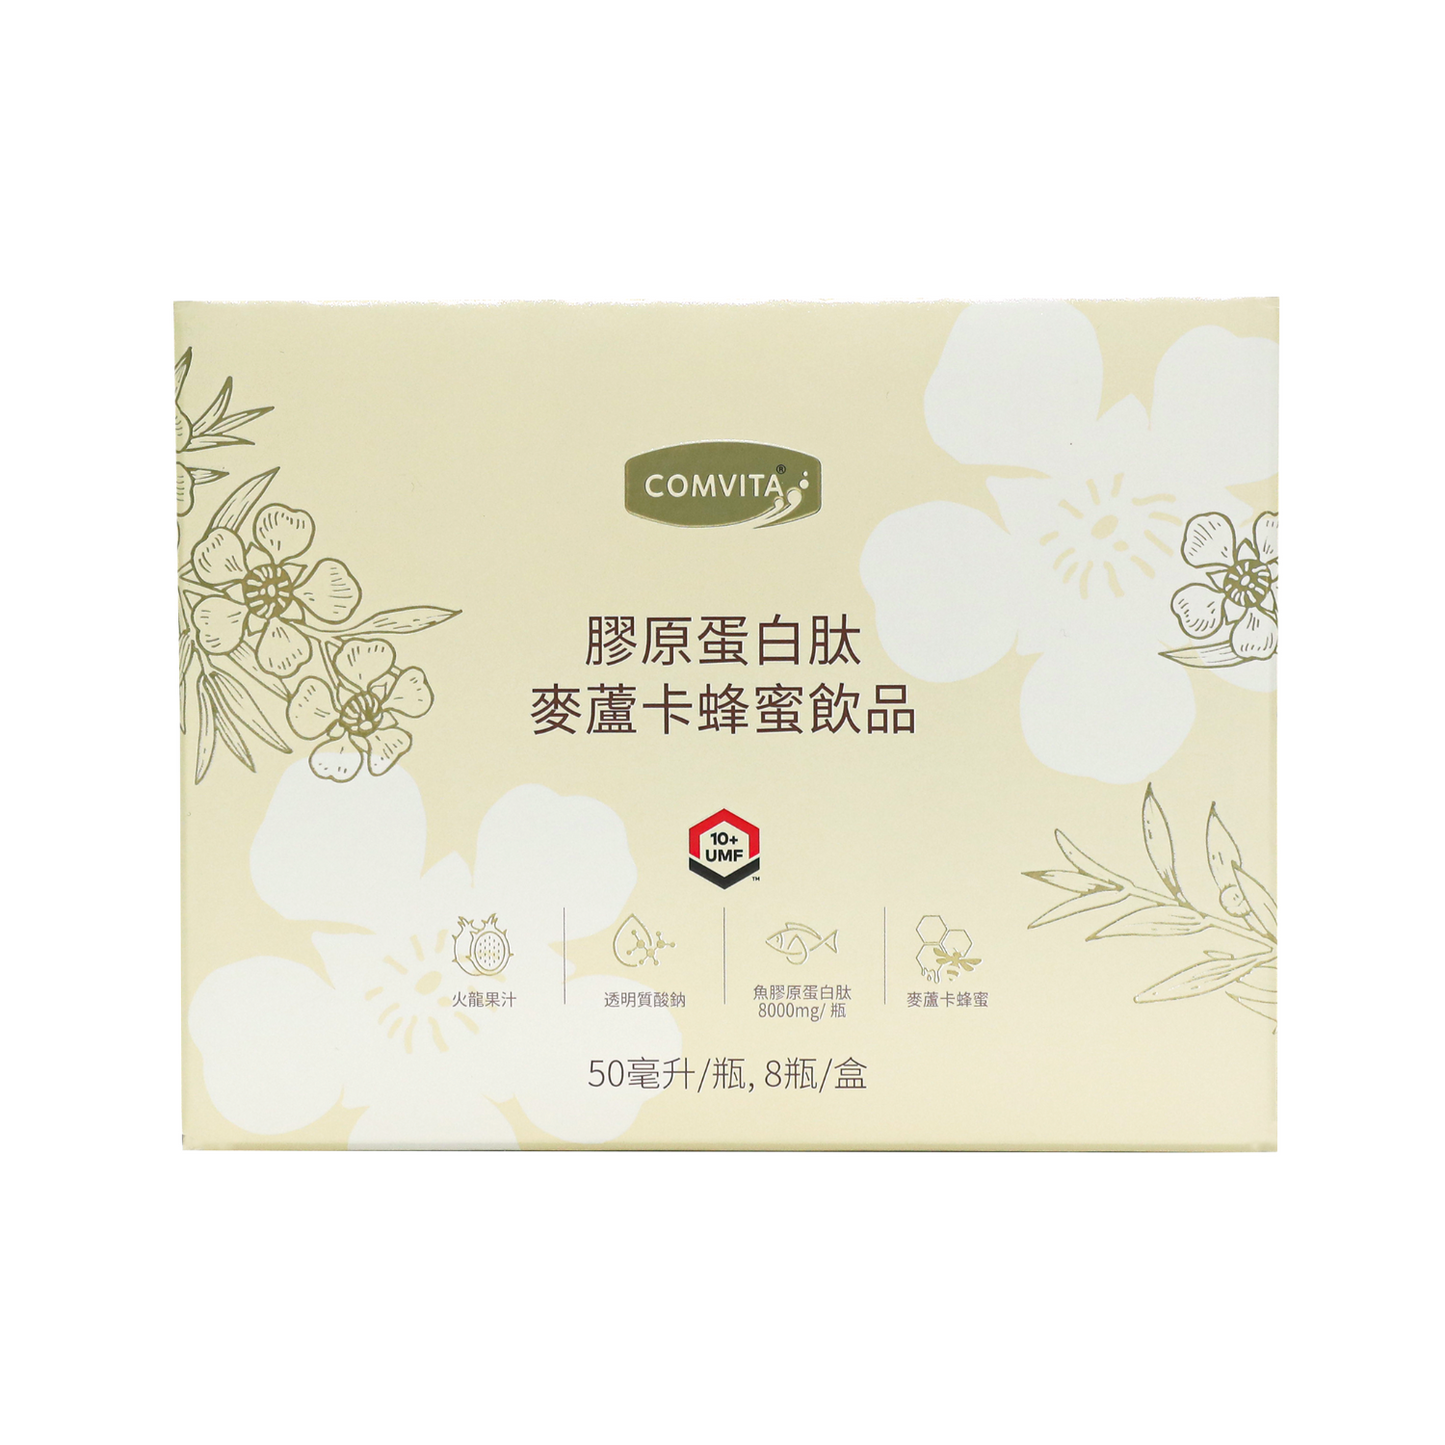 Comvita Collagen Peptide UMF™10+ Manuka Honey Drink, 50ml